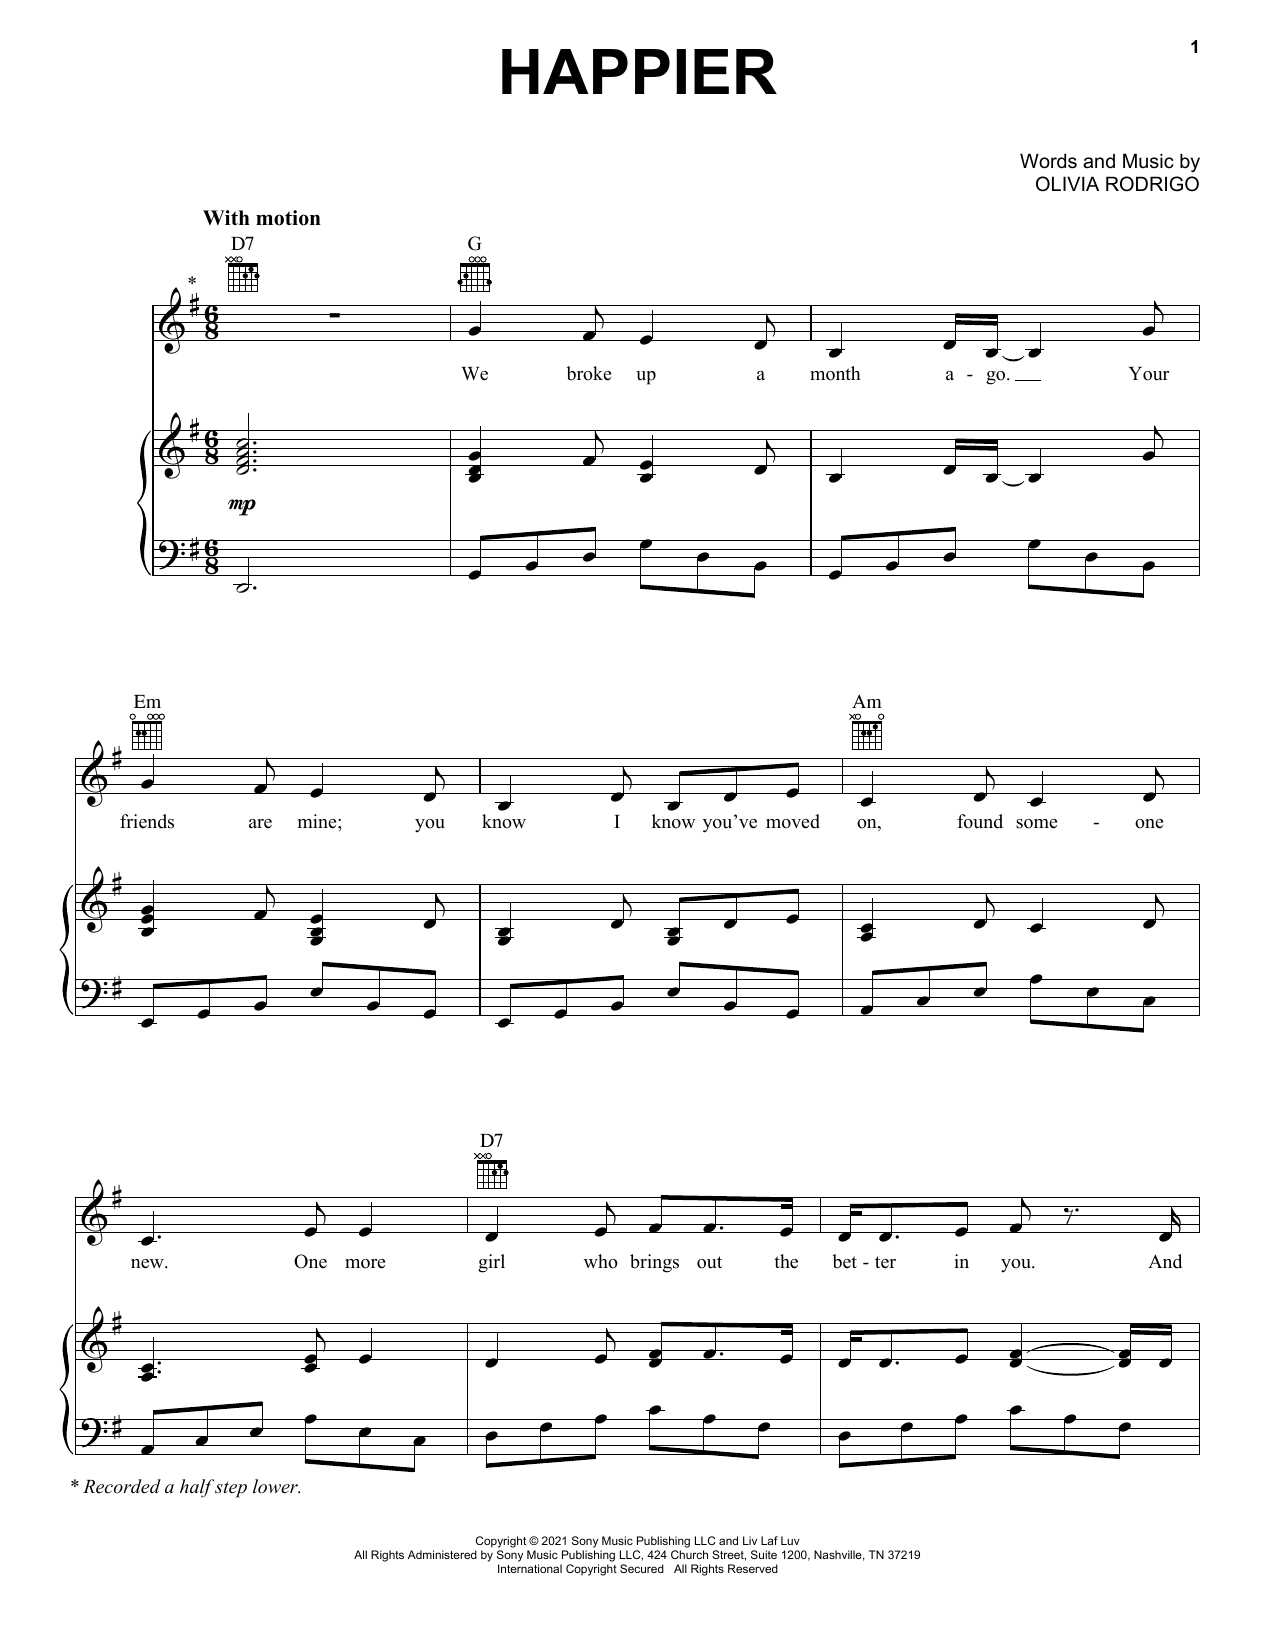 Olivia Rodrigo happier Sheet Music Notes & Chords for Piano, Vocal & Guitar (Right-Hand Melody) - Download or Print PDF